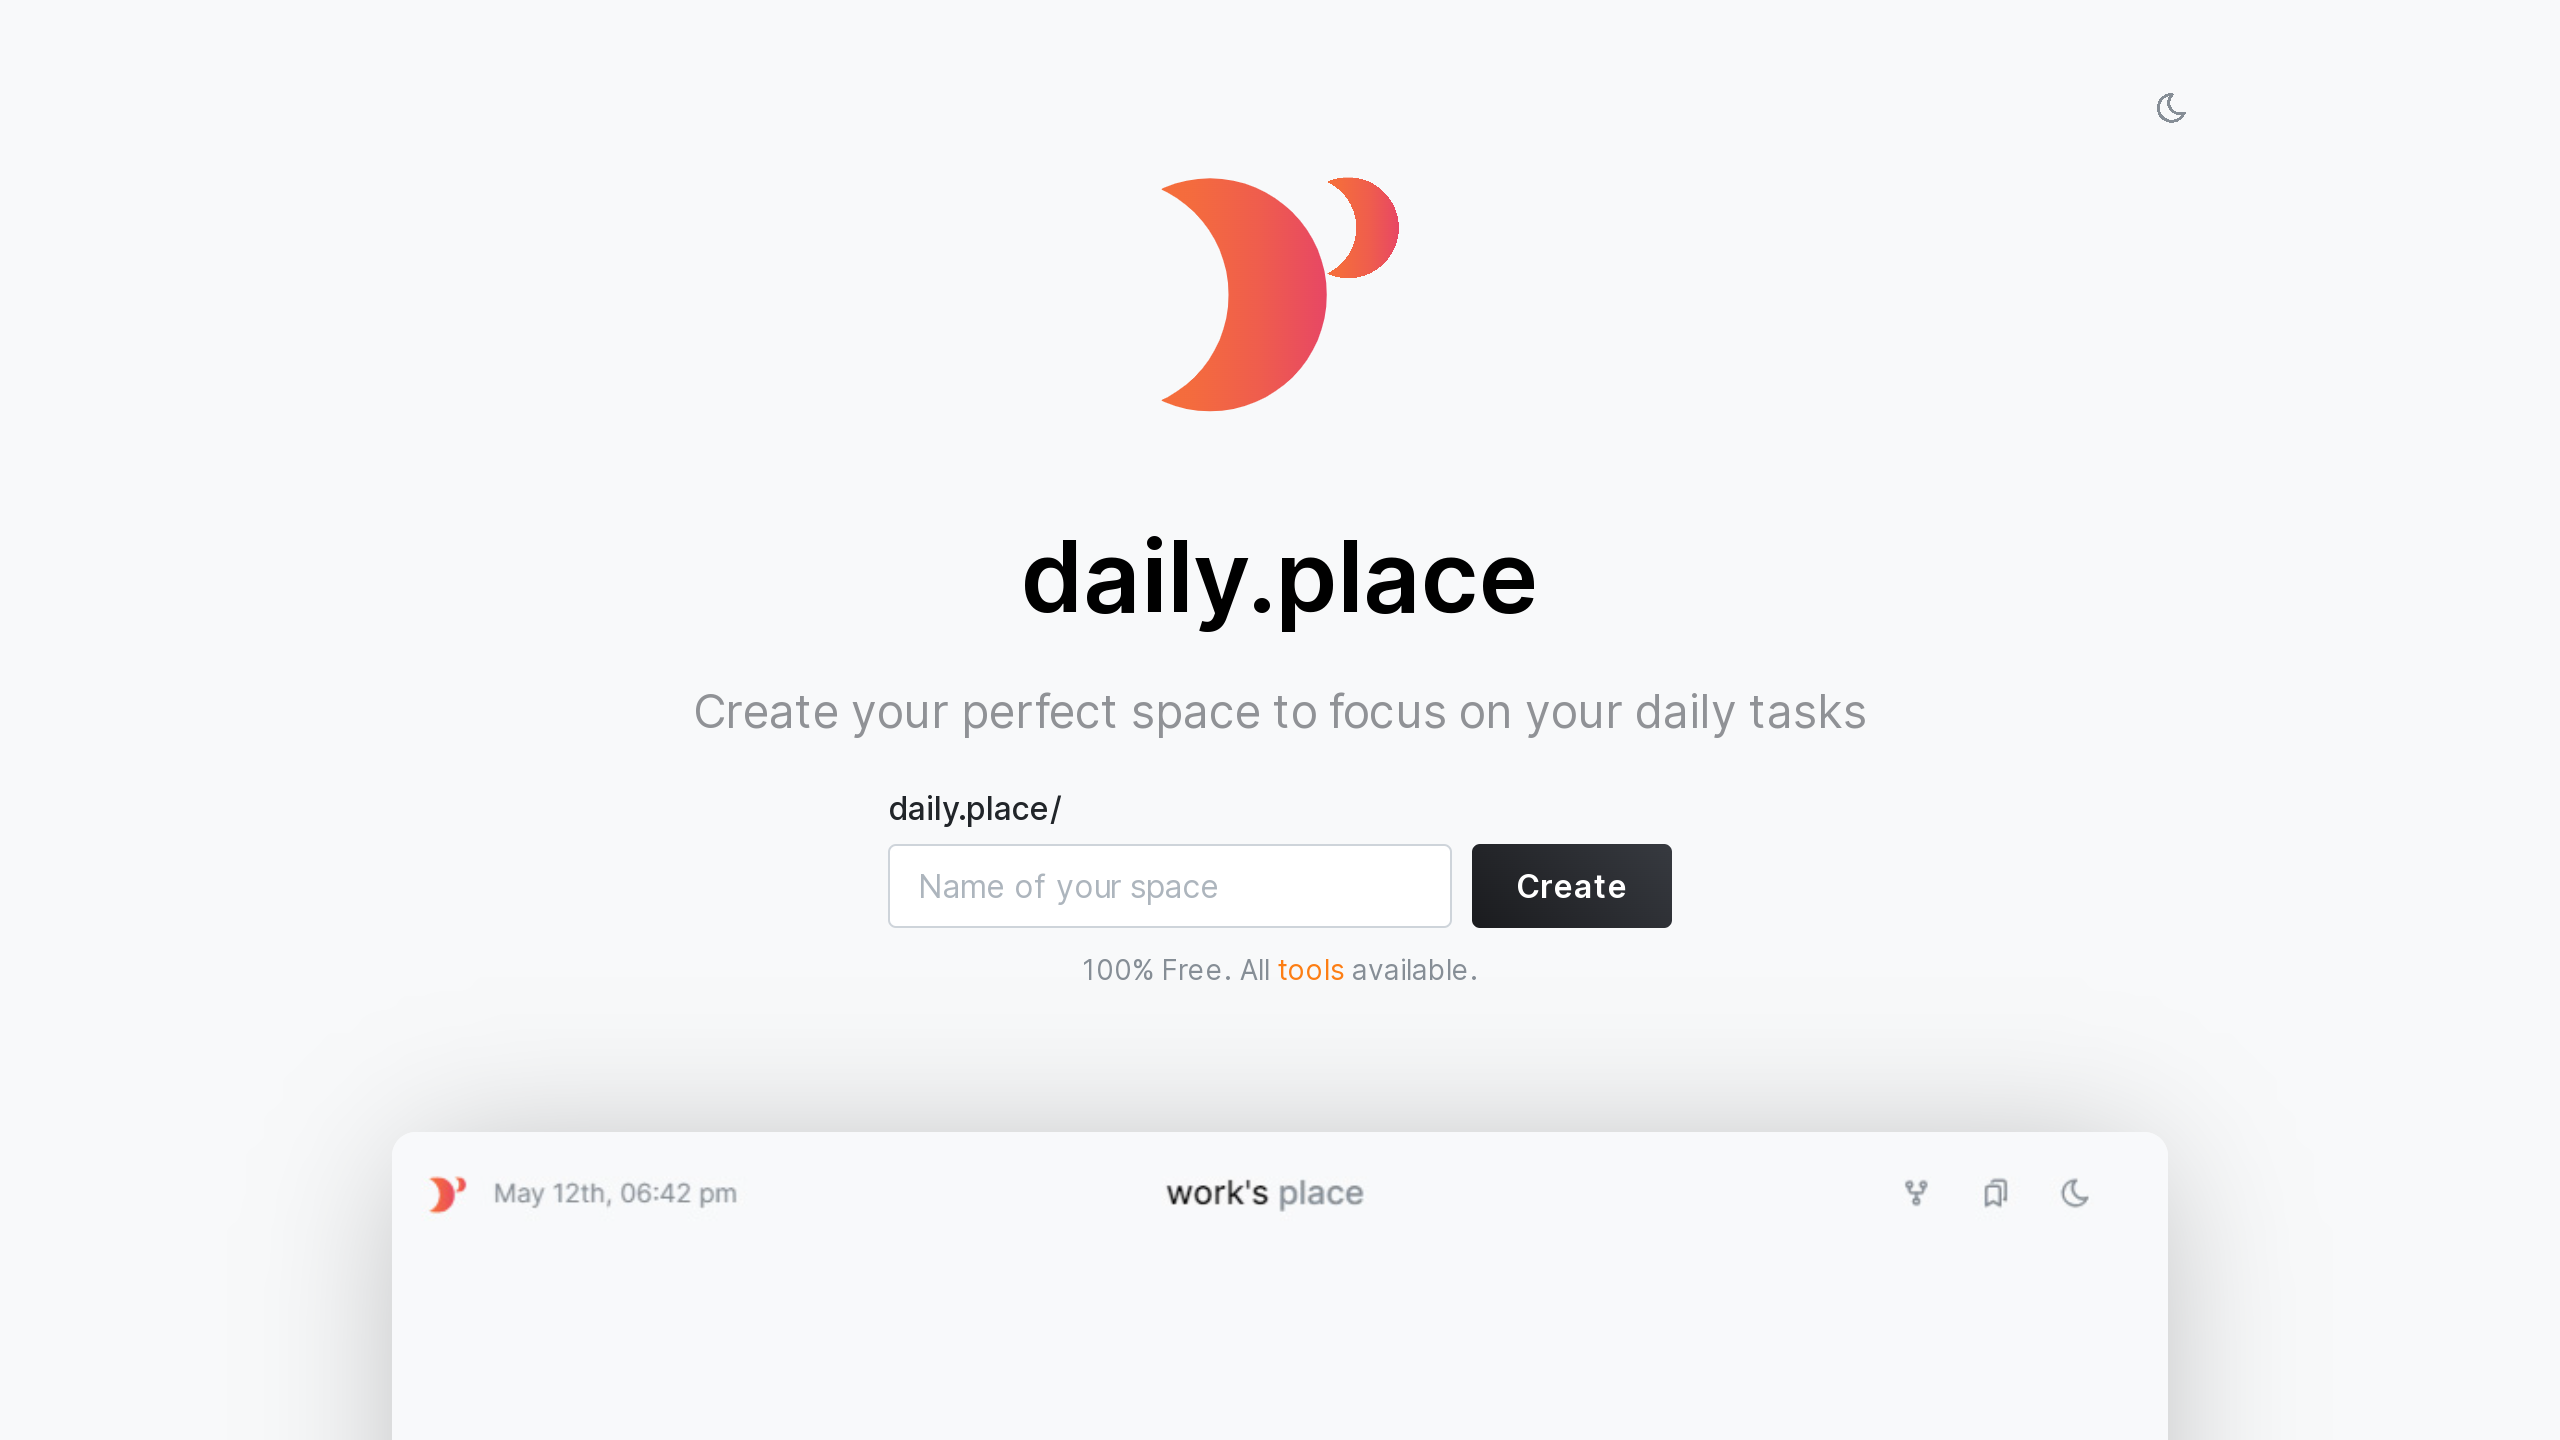 daily.place's website screenshot